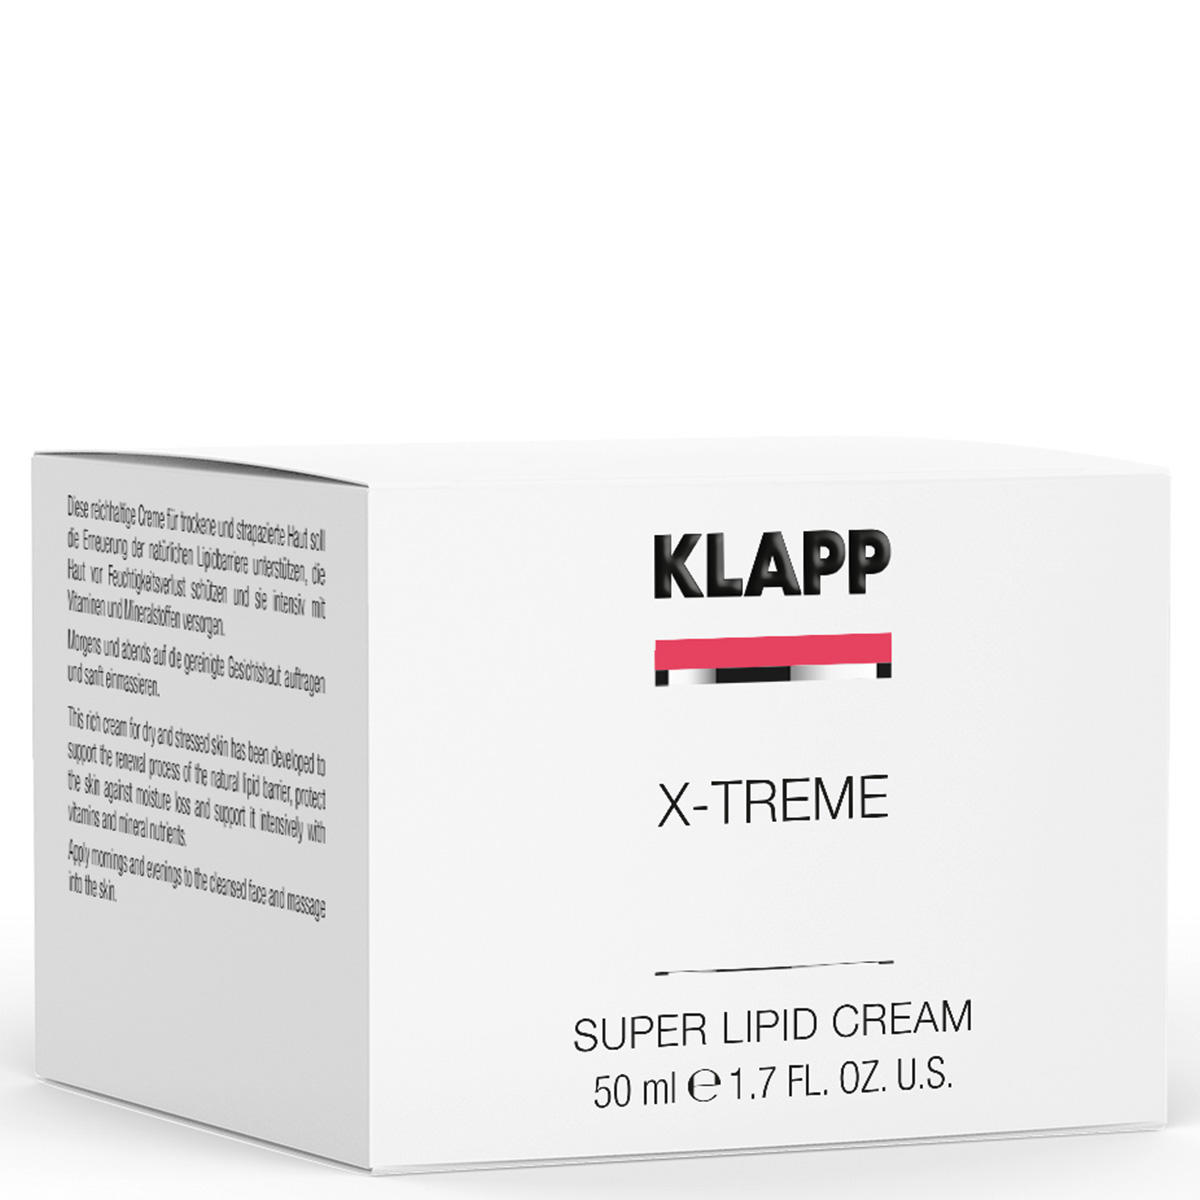 KLAPP X-TREME Super Lipid Cream 50 ml - 2